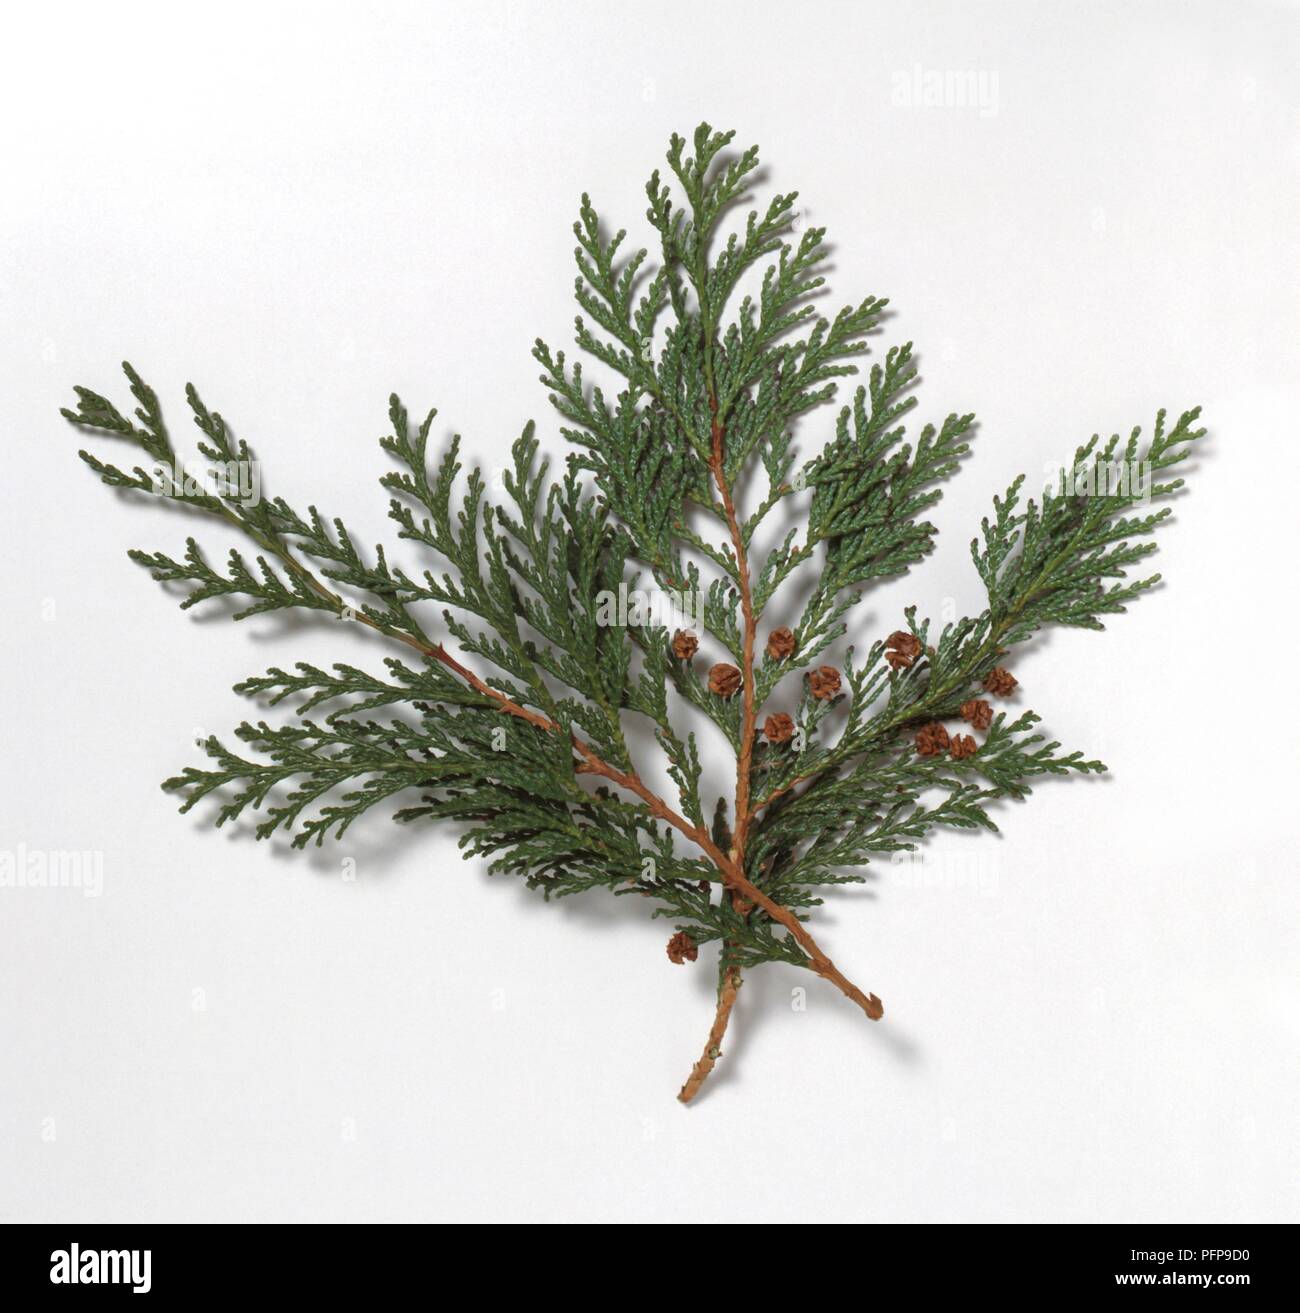 Chamaecyparis pisifera (Sawara cypress), stems with green leaves and tiny cones Stock Photo